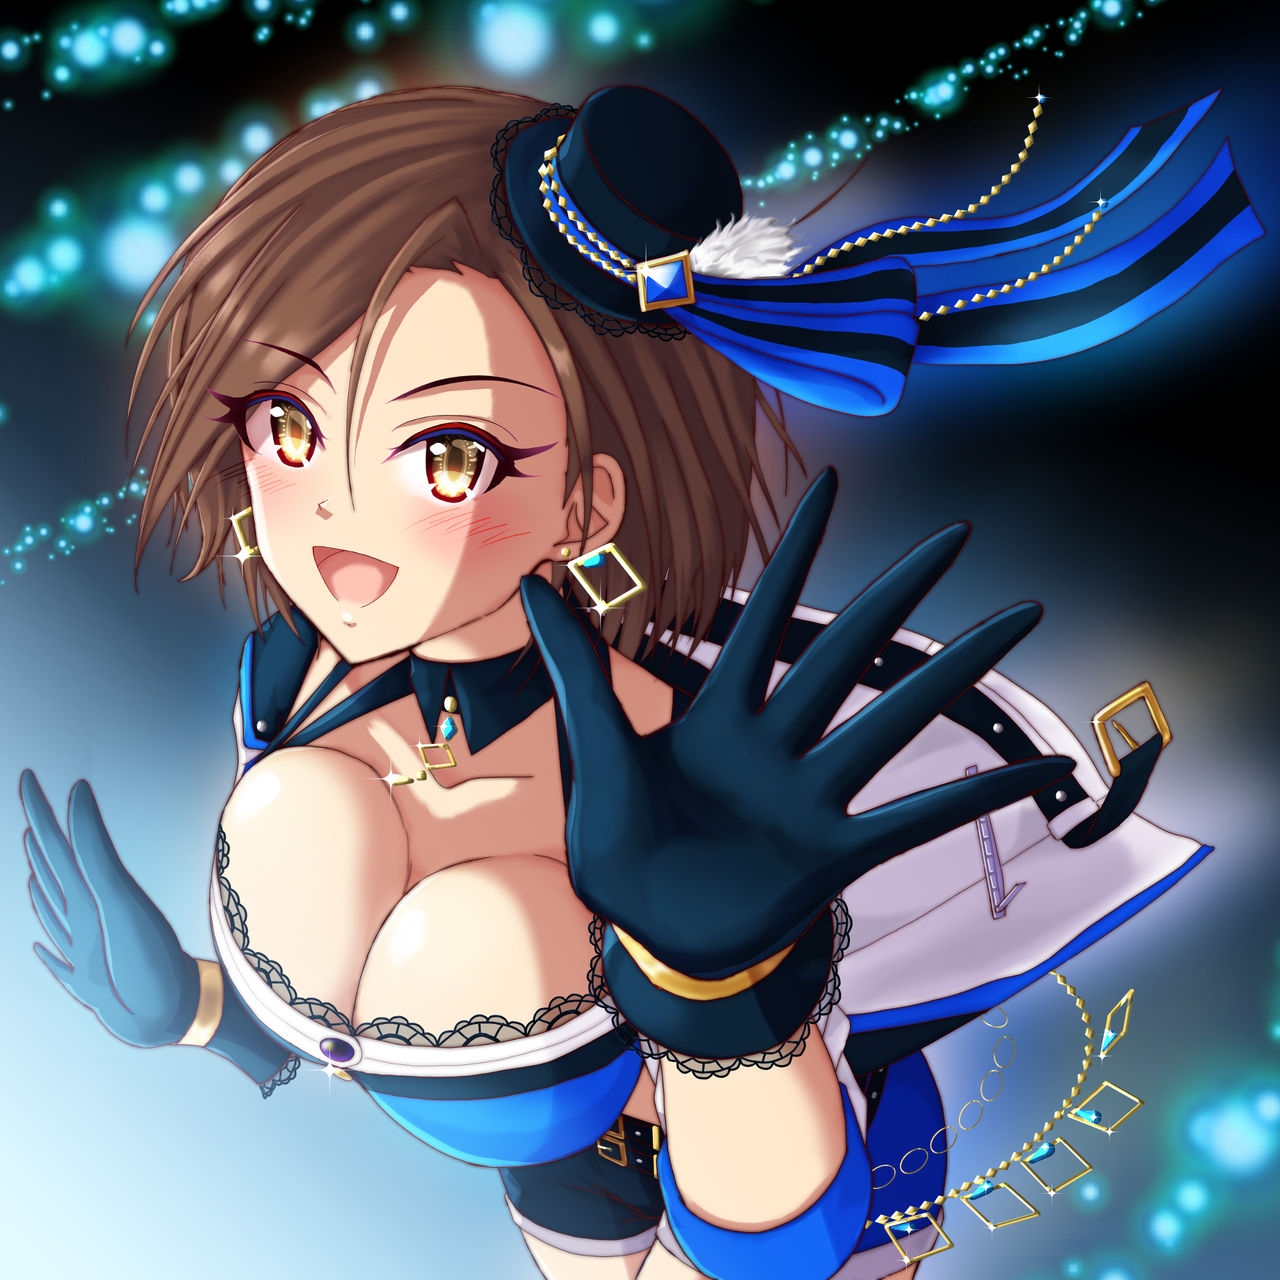 Idolmaster Character Fan Art Gallery - Seira Mizuki 10